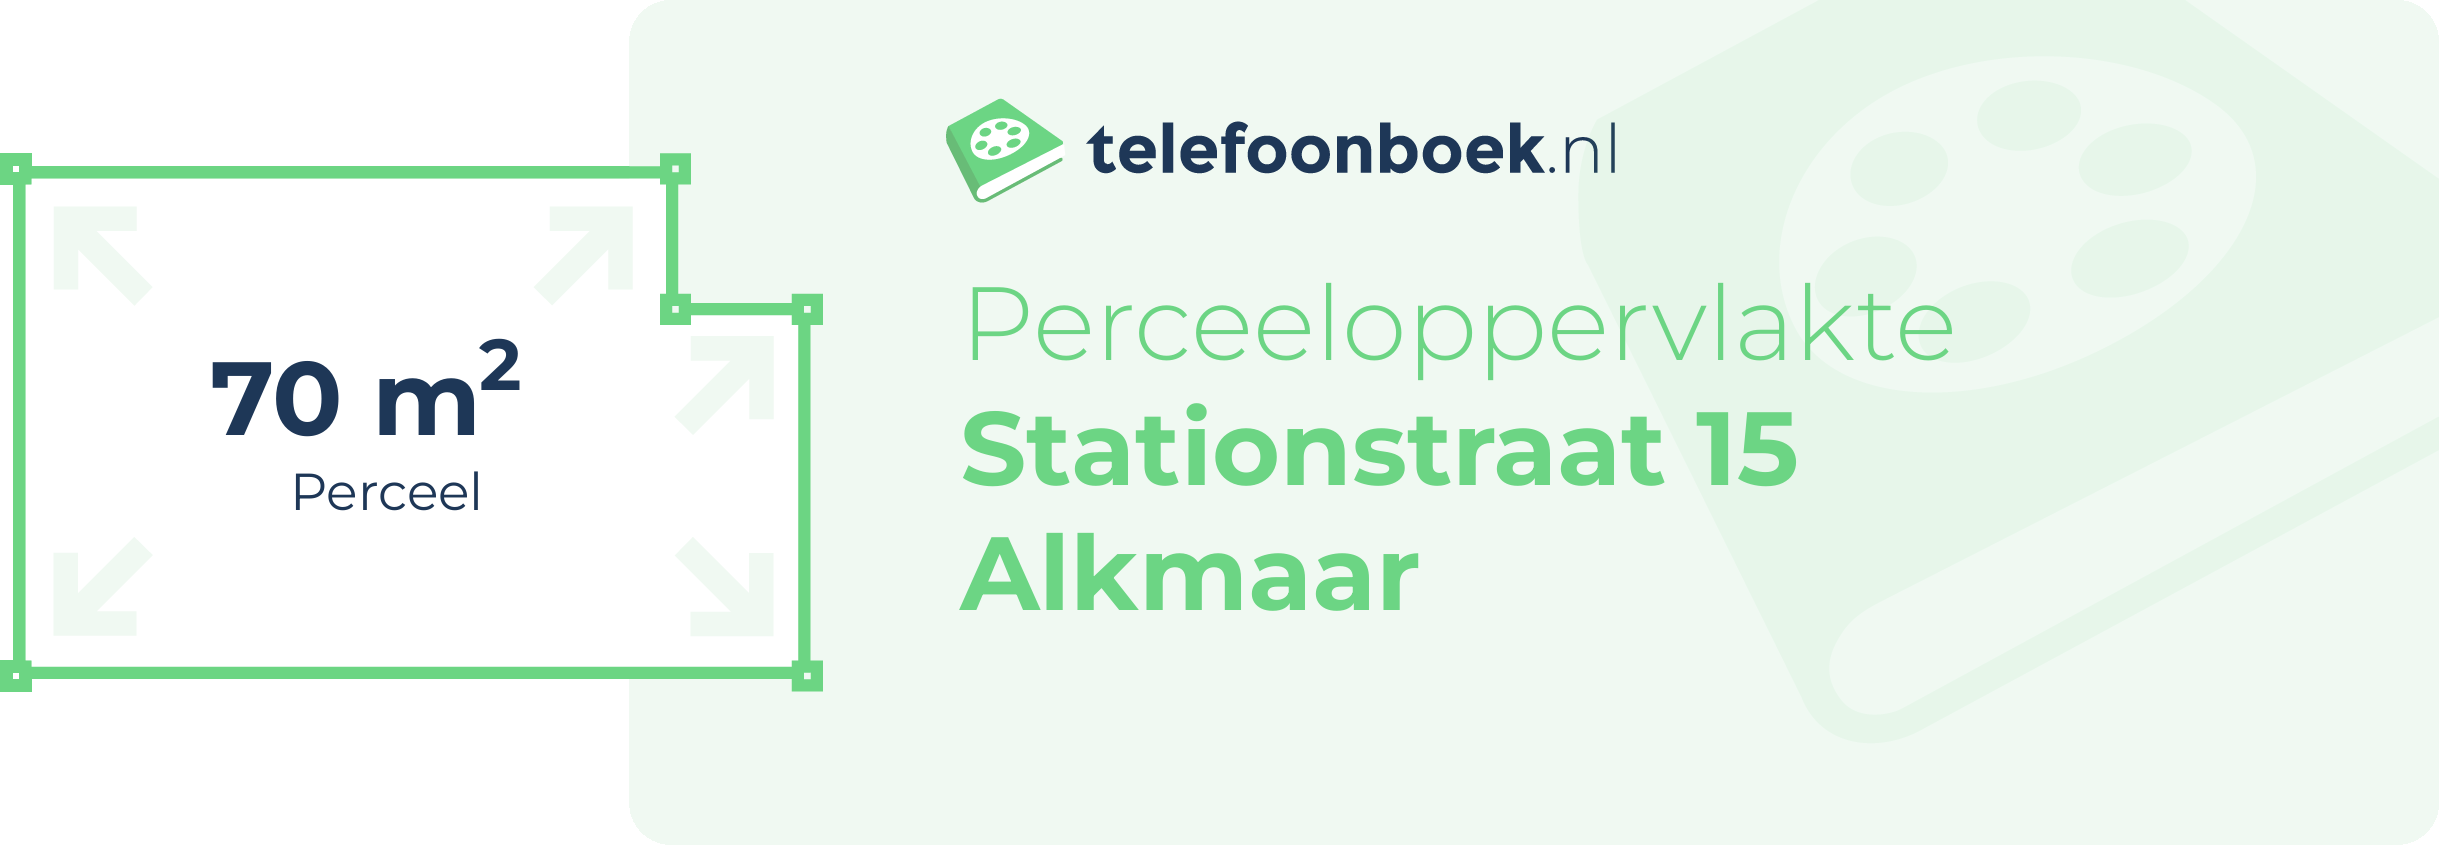 Perceeloppervlakte Stationstraat 15 Alkmaar